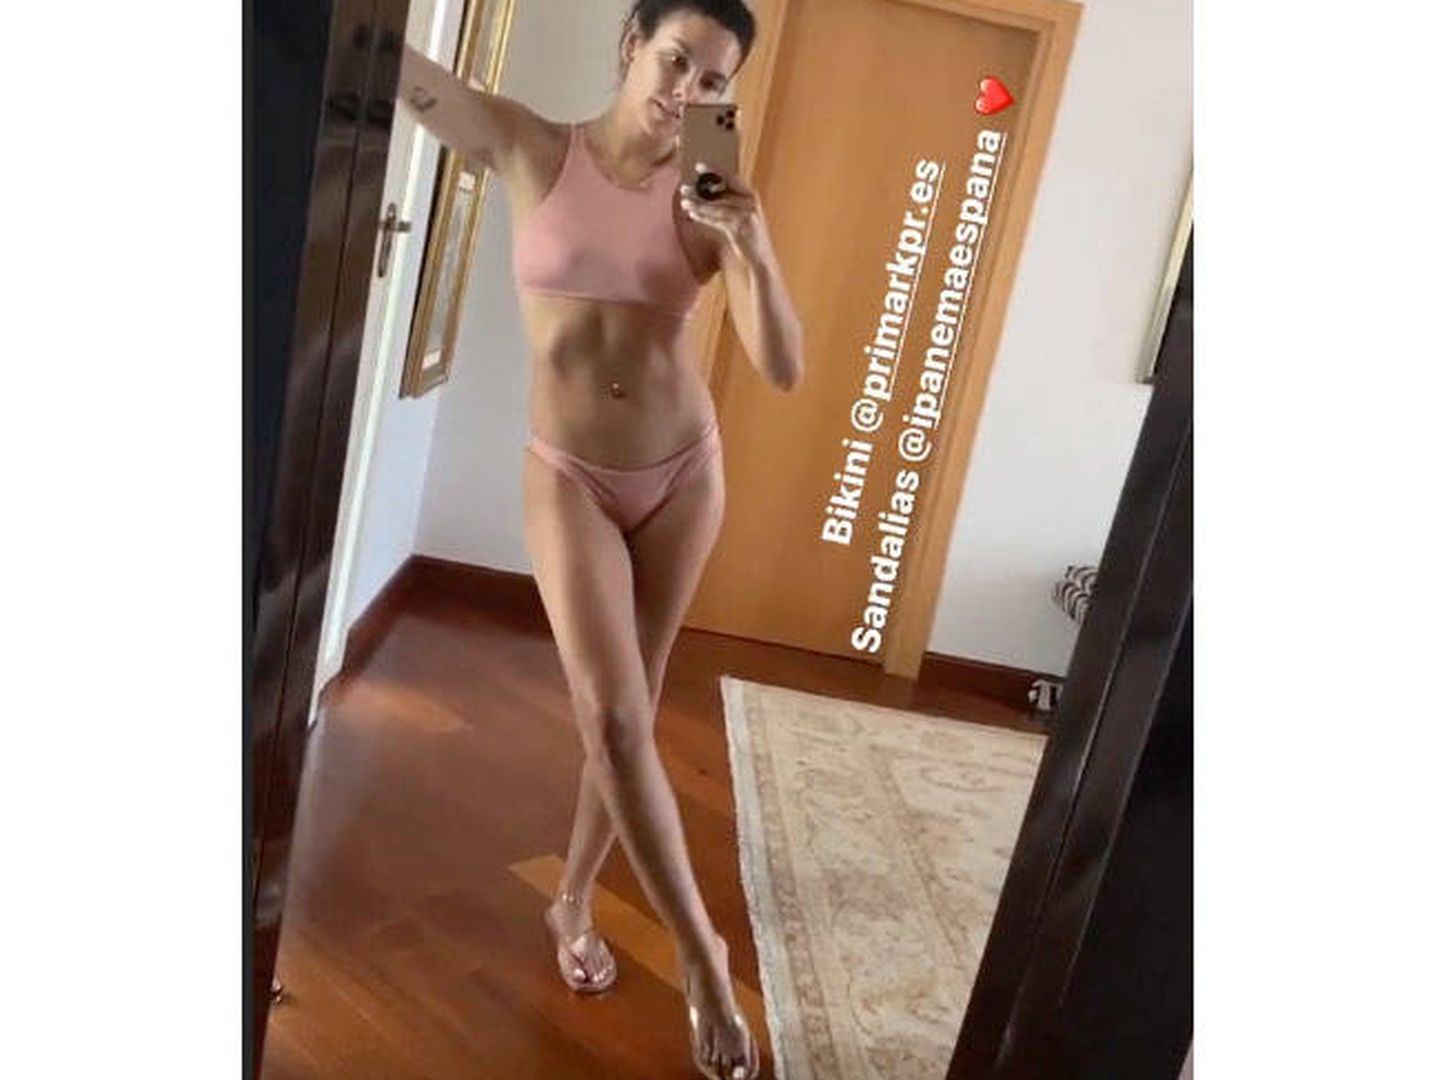 Cristina Pedroche alardea de su bikini de Primark en Instagram. (Instagram, @cristipedroche)